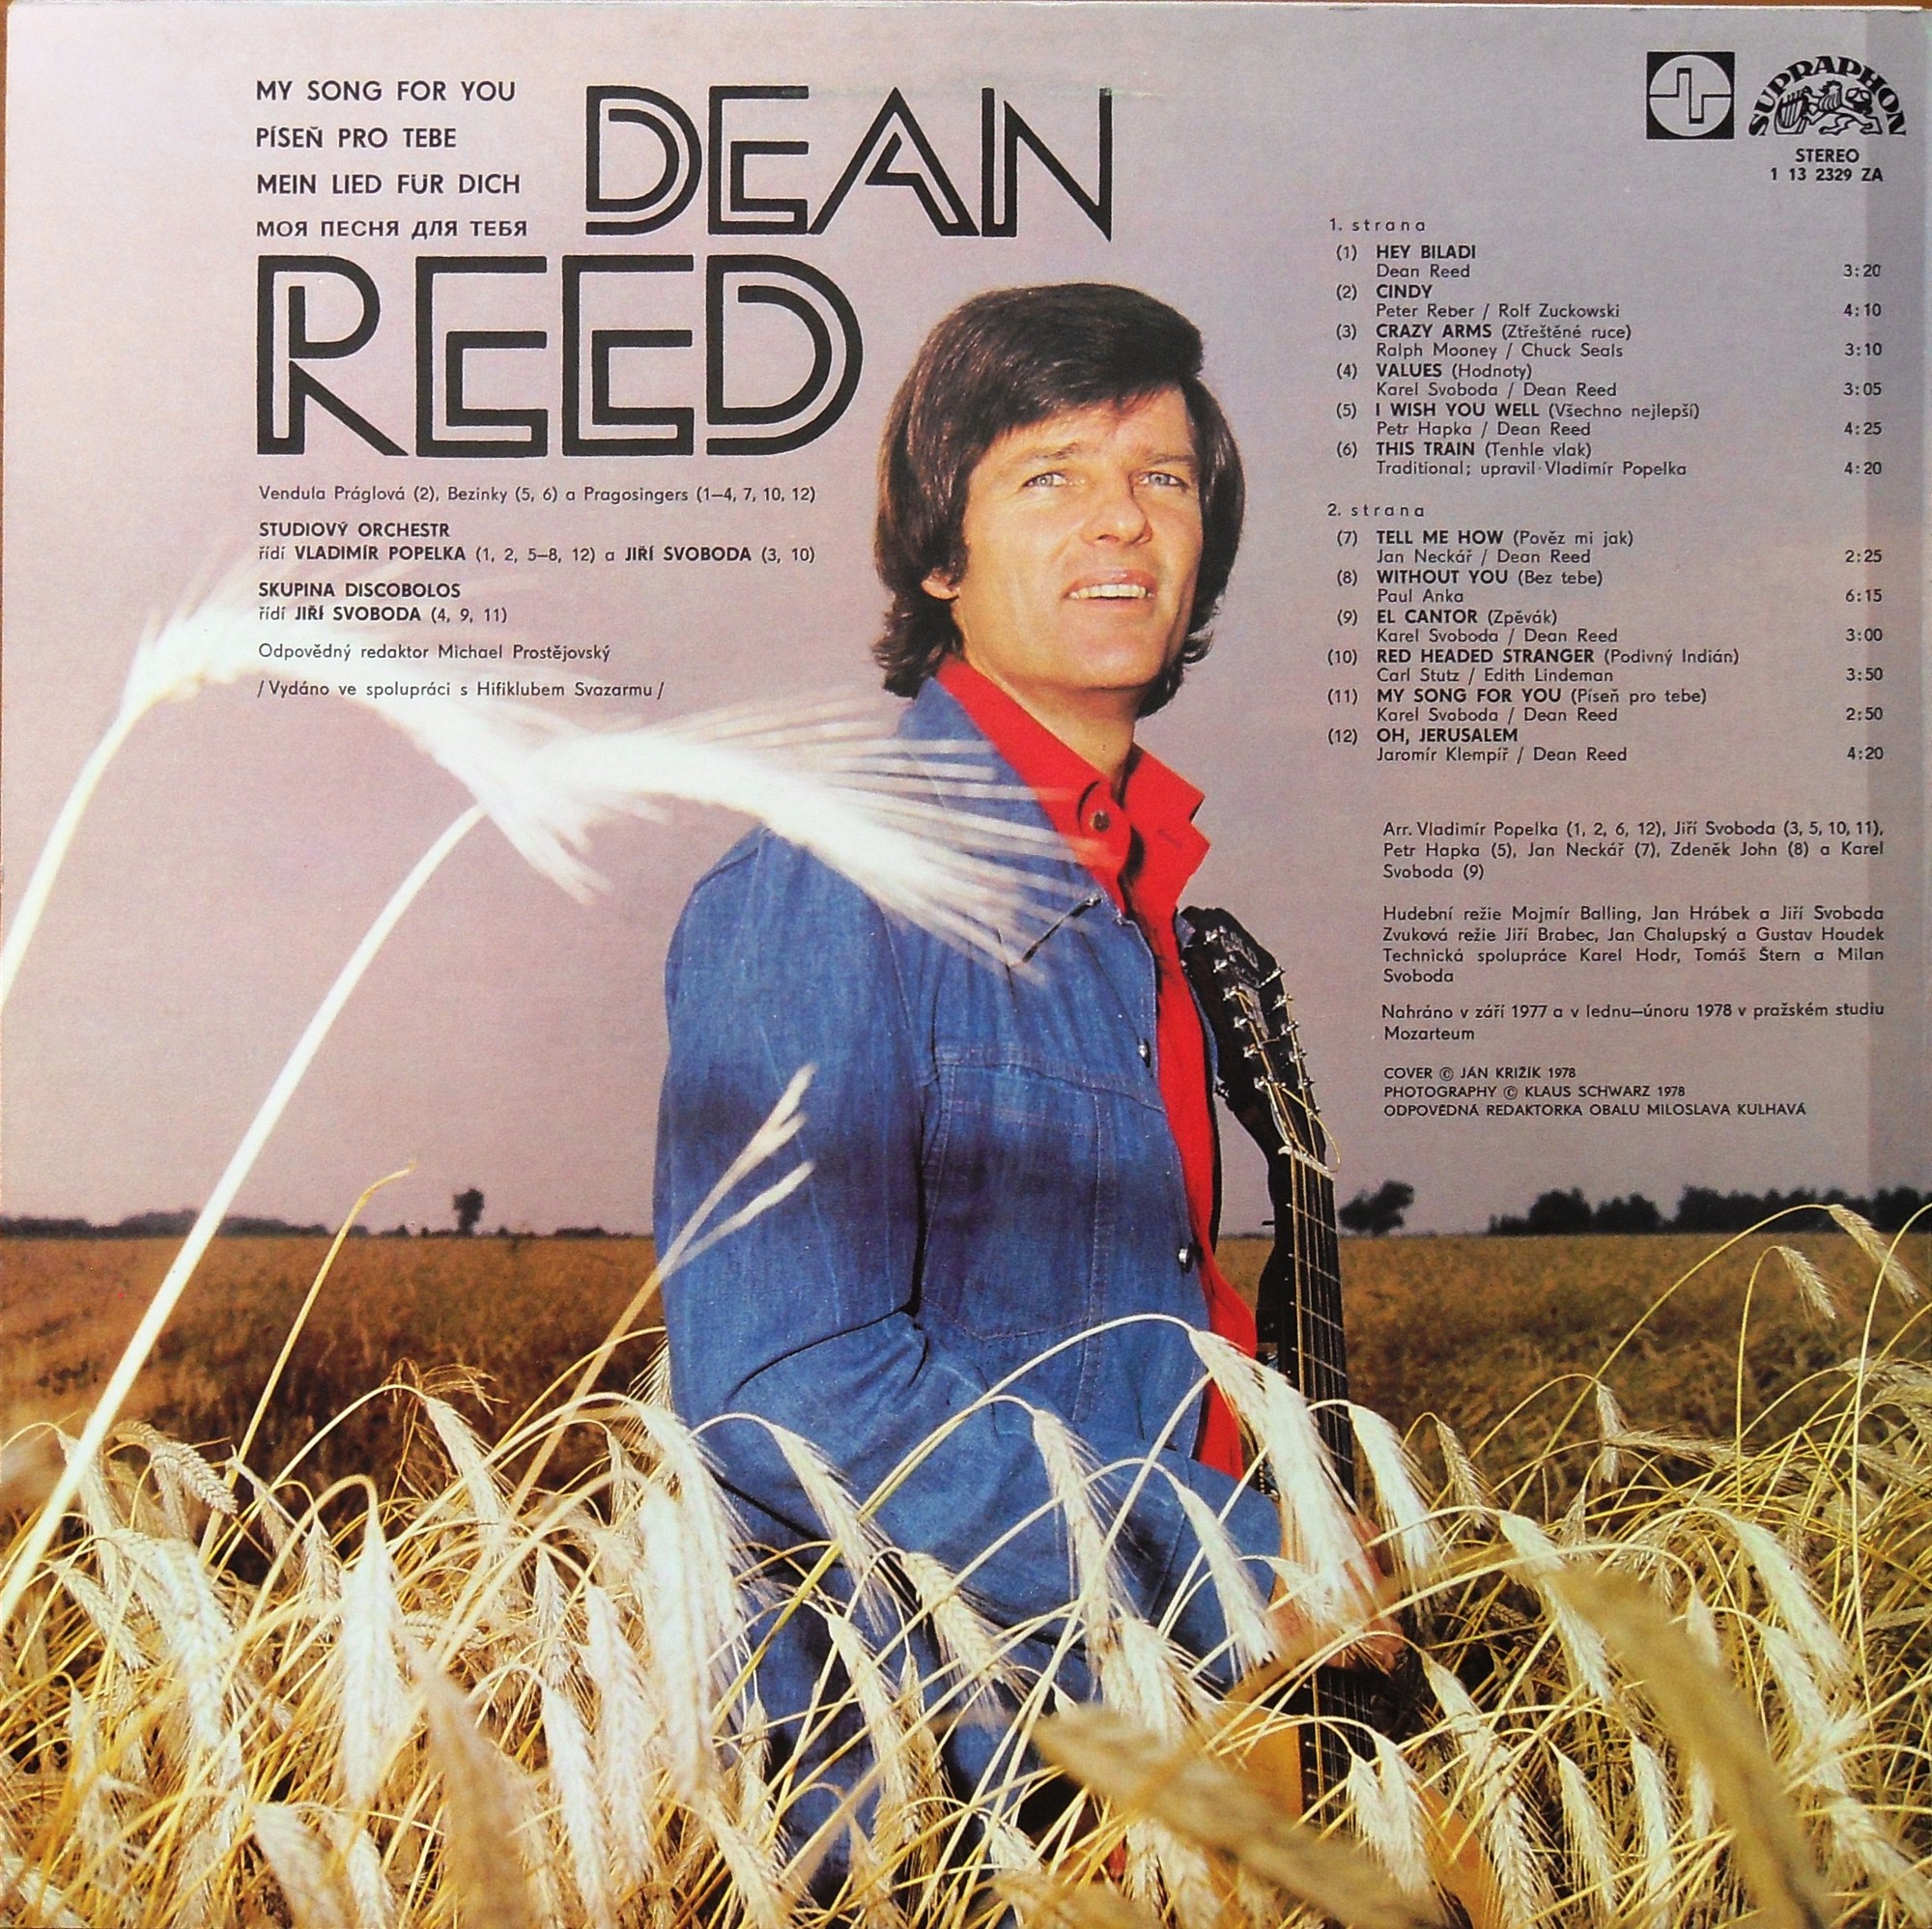 Dean Reed - My Song For You / Pisen pro tebe [по заказу чешской фирмы SUPRAPHON 1 13 2329]